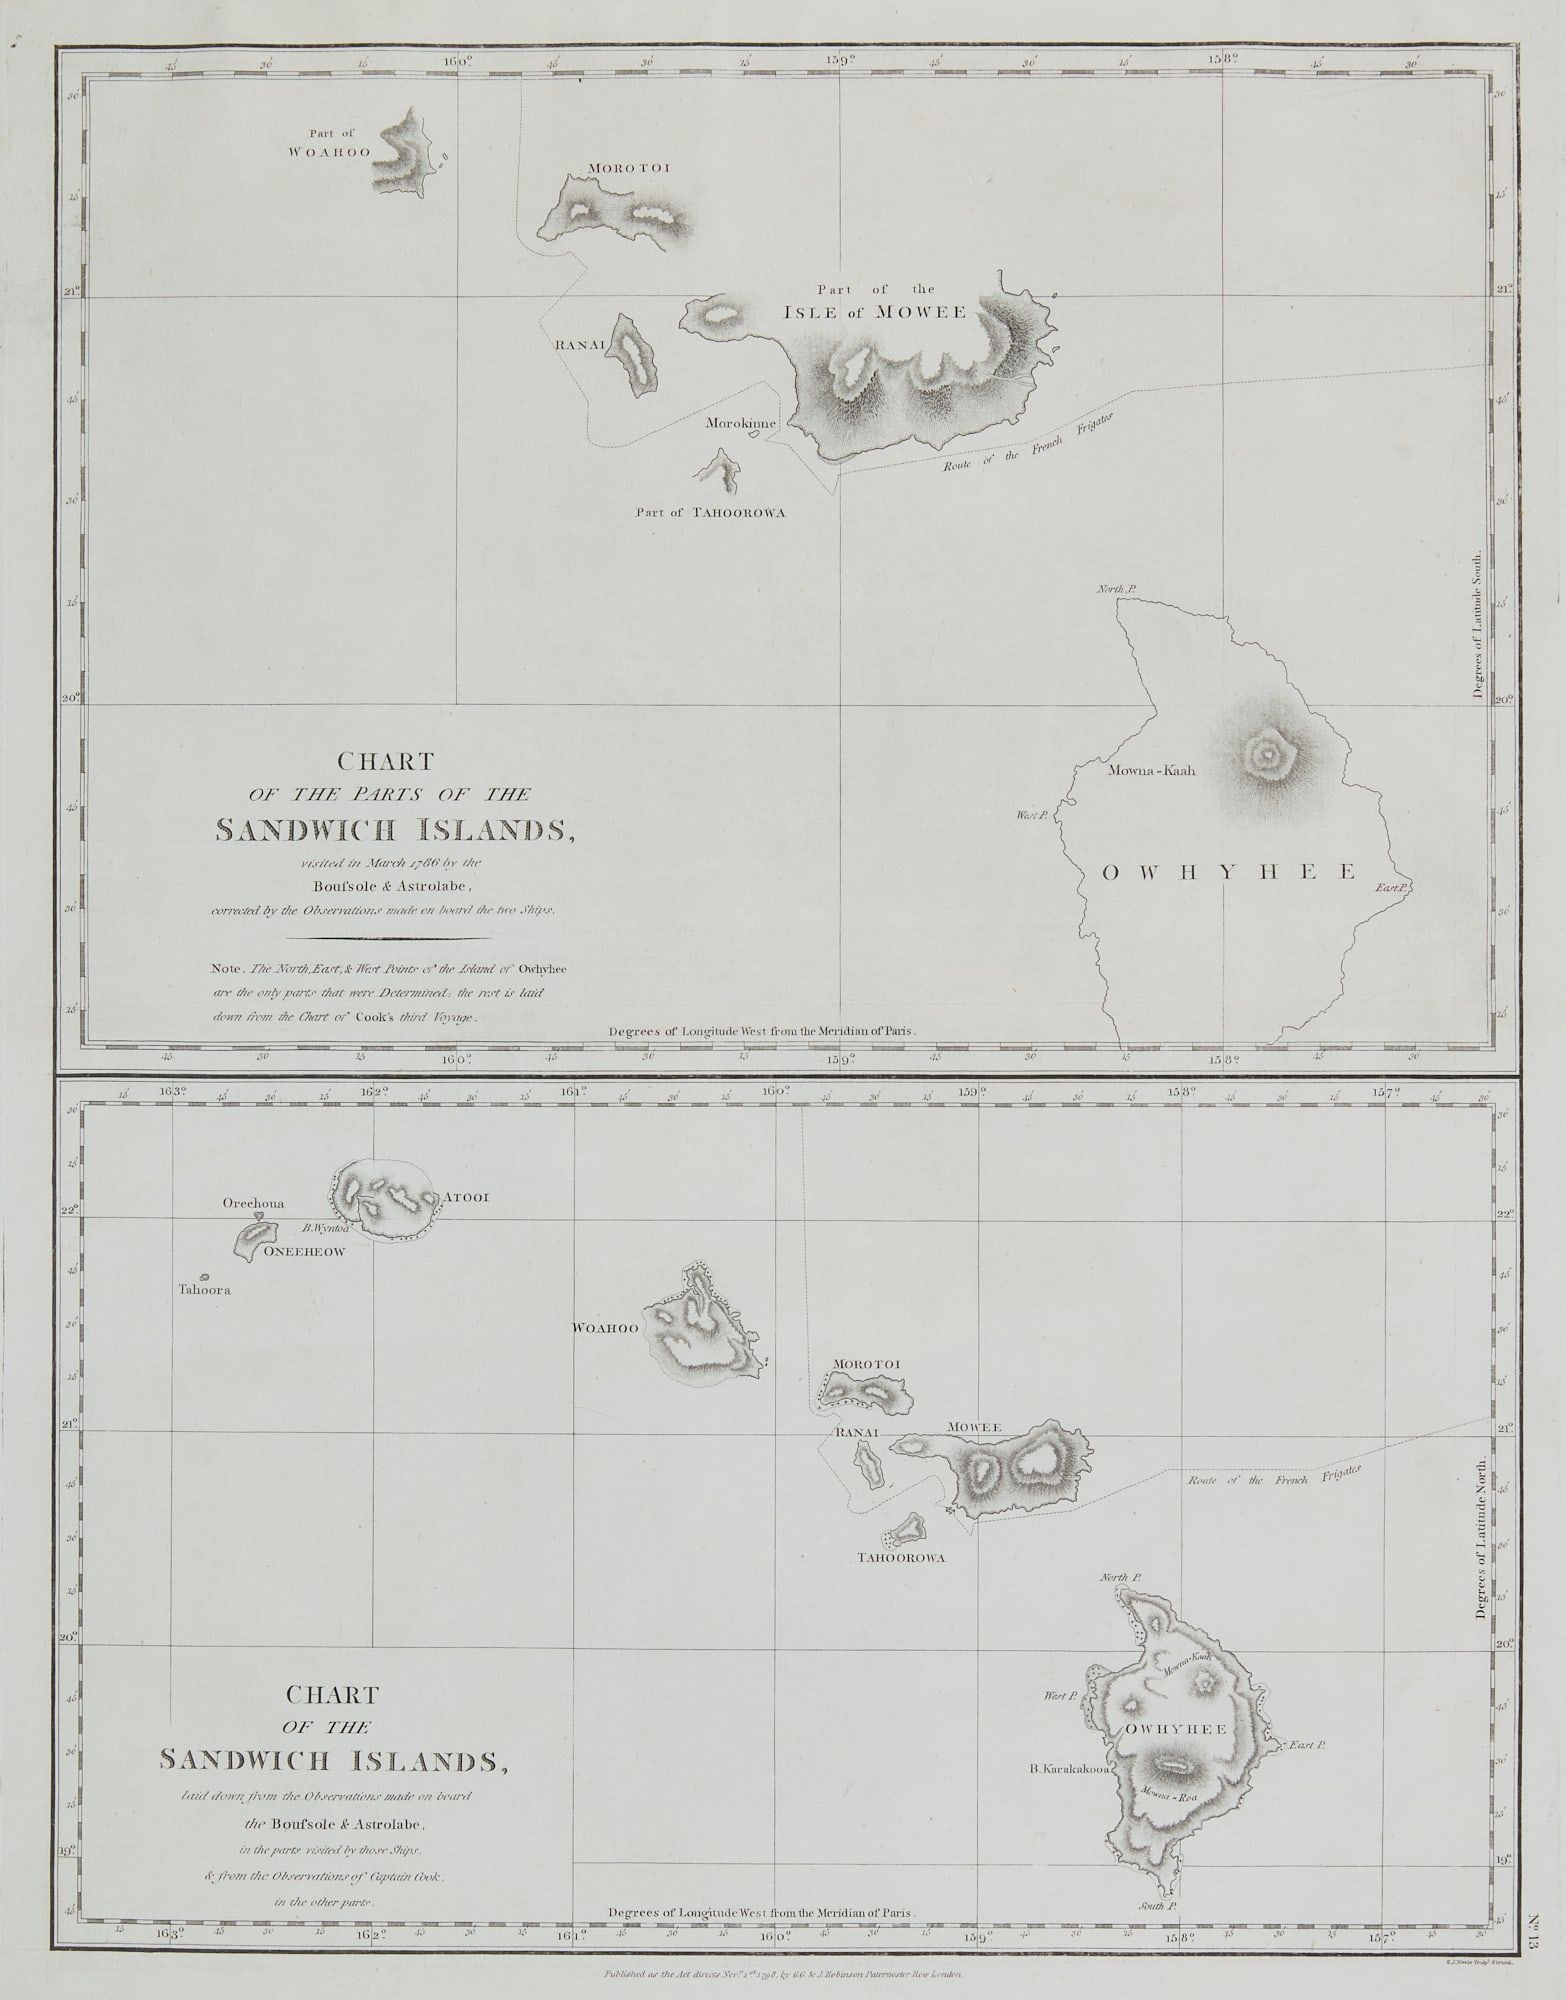 A CHART OF THE SANDWICH ISLANDSA